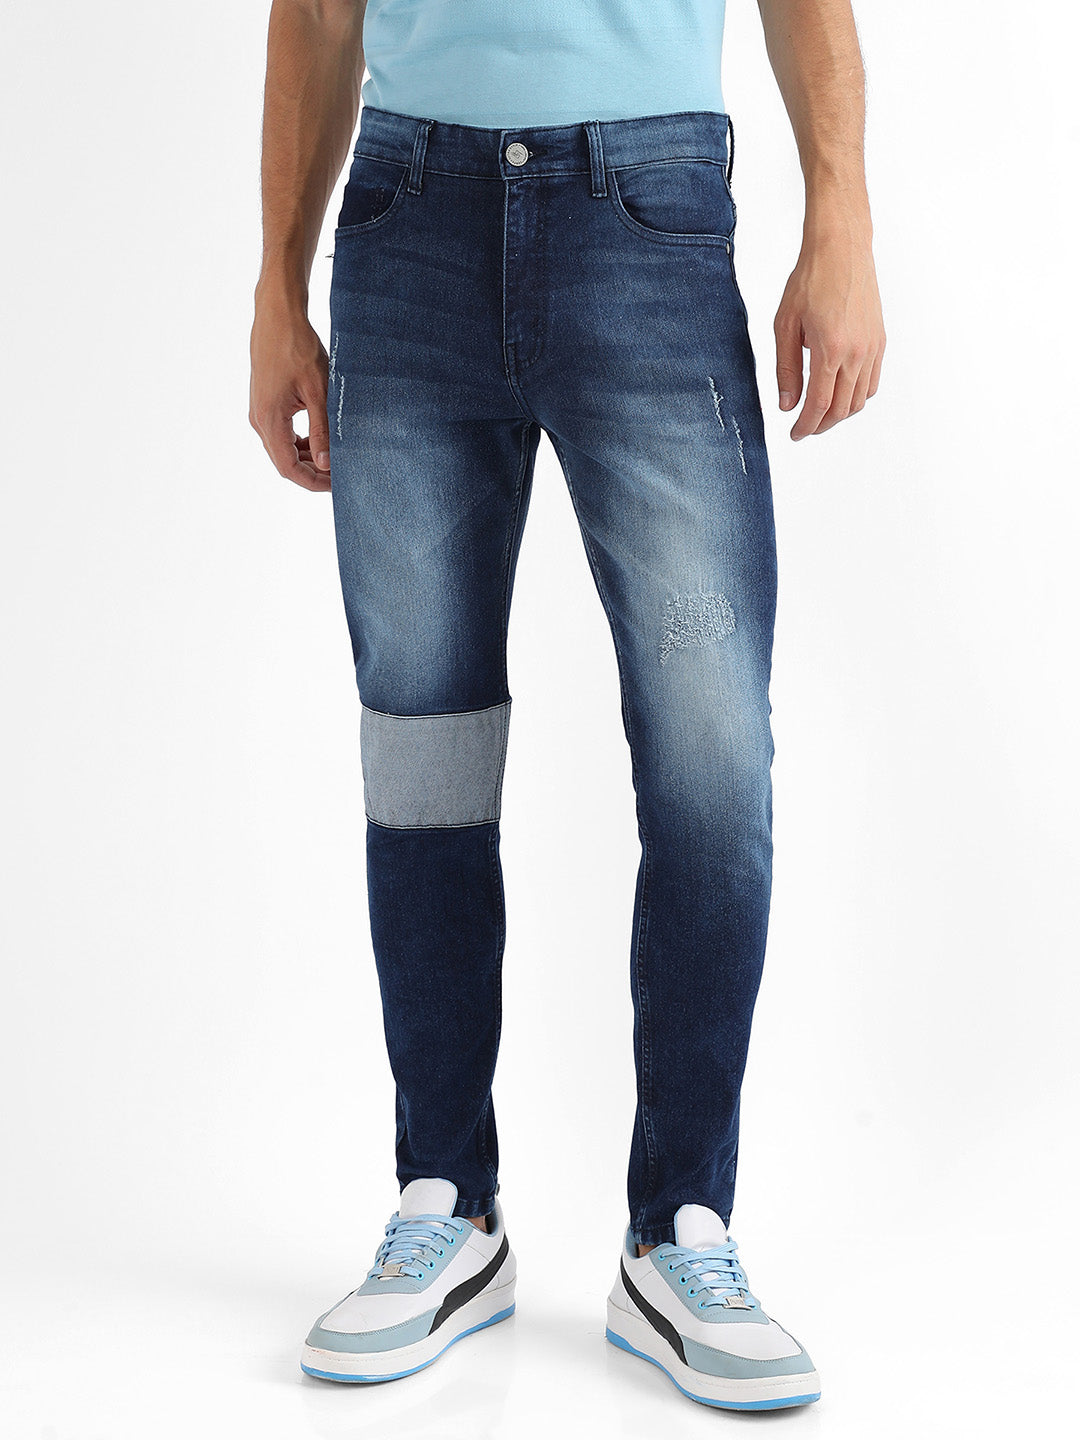 Contrast Patch Distressed Denim Jeans